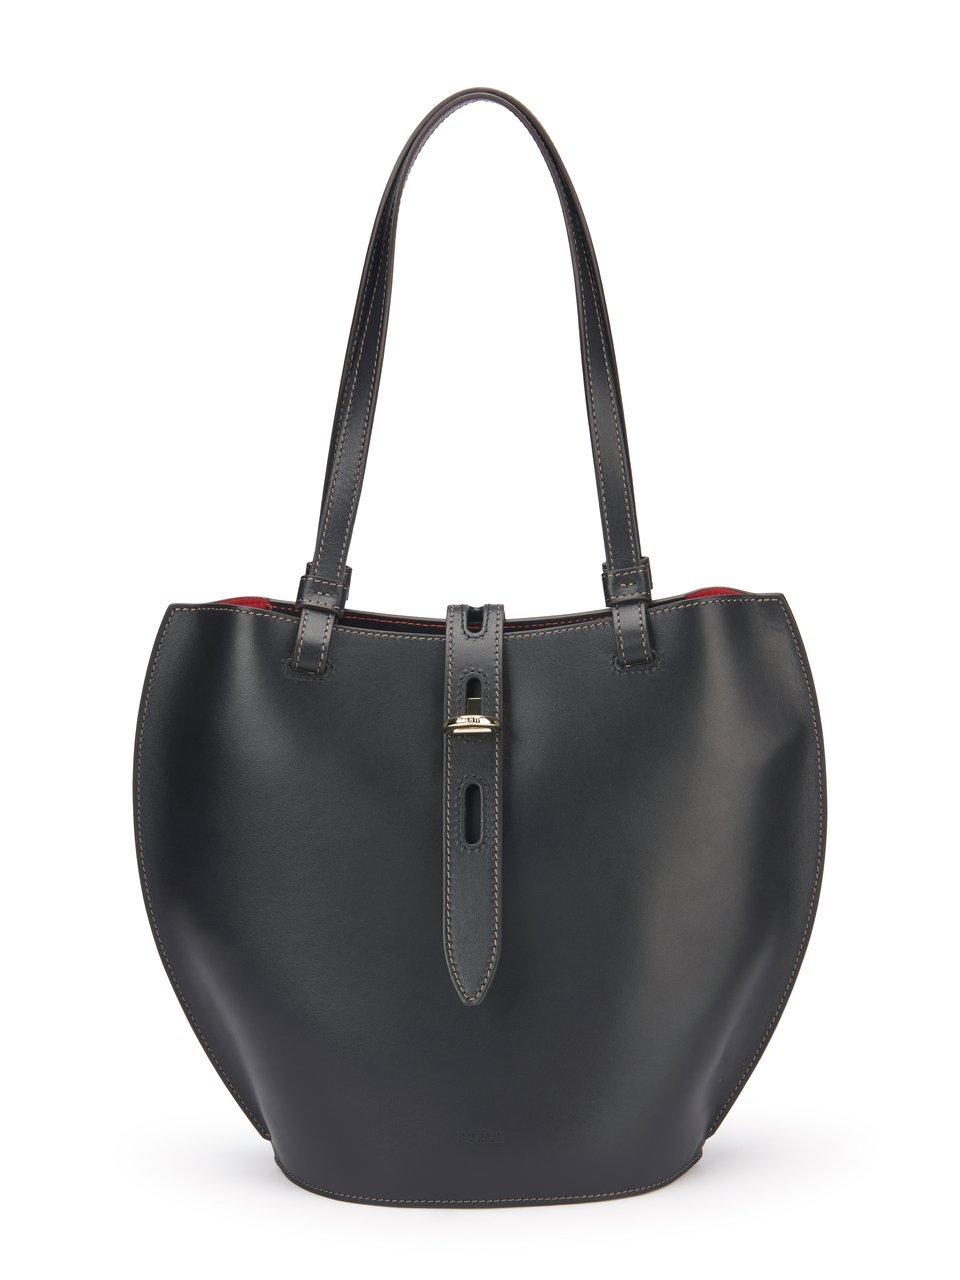 Image of Handbag “Unica“ Furla black